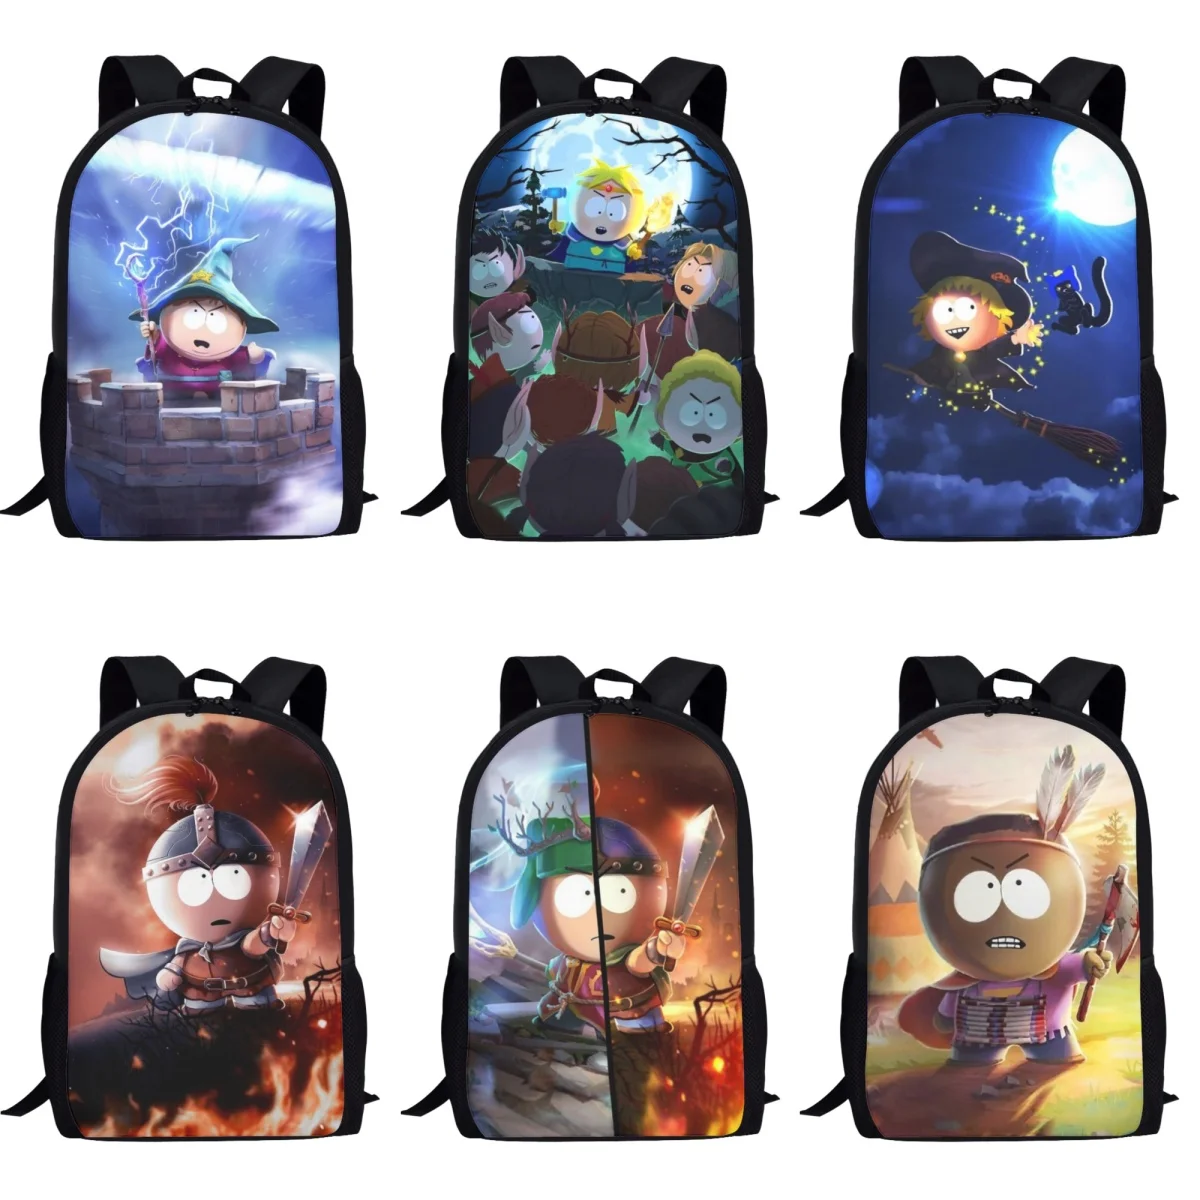 Cartoon South-Park 3D Print Schoolbags for Boys Children Primary Students Backpacks Kids Book Bag Satchel Casual Shoulder Bags